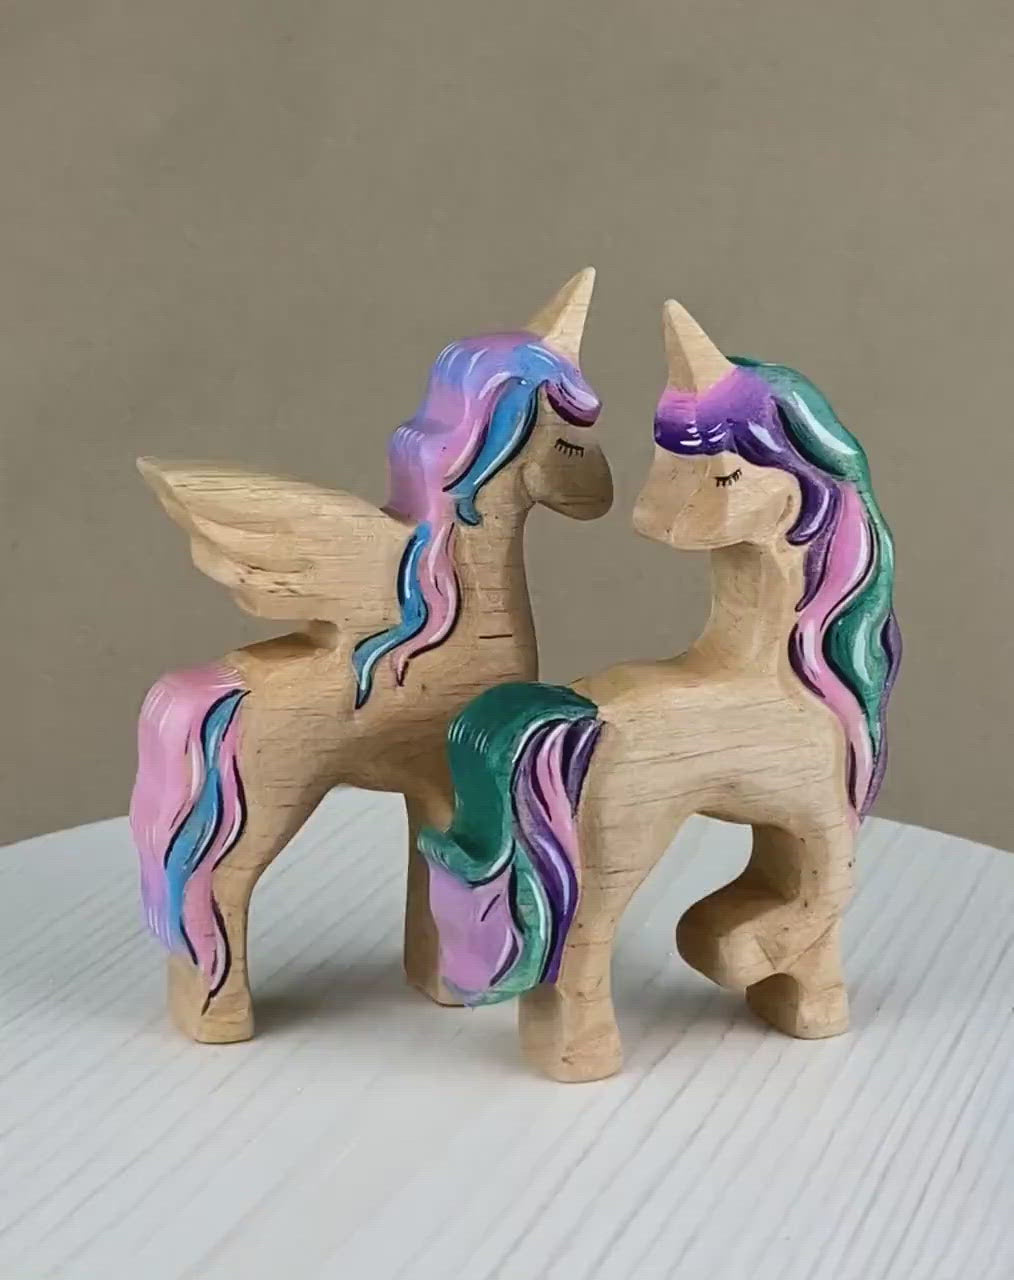 Wooden Pony Stories